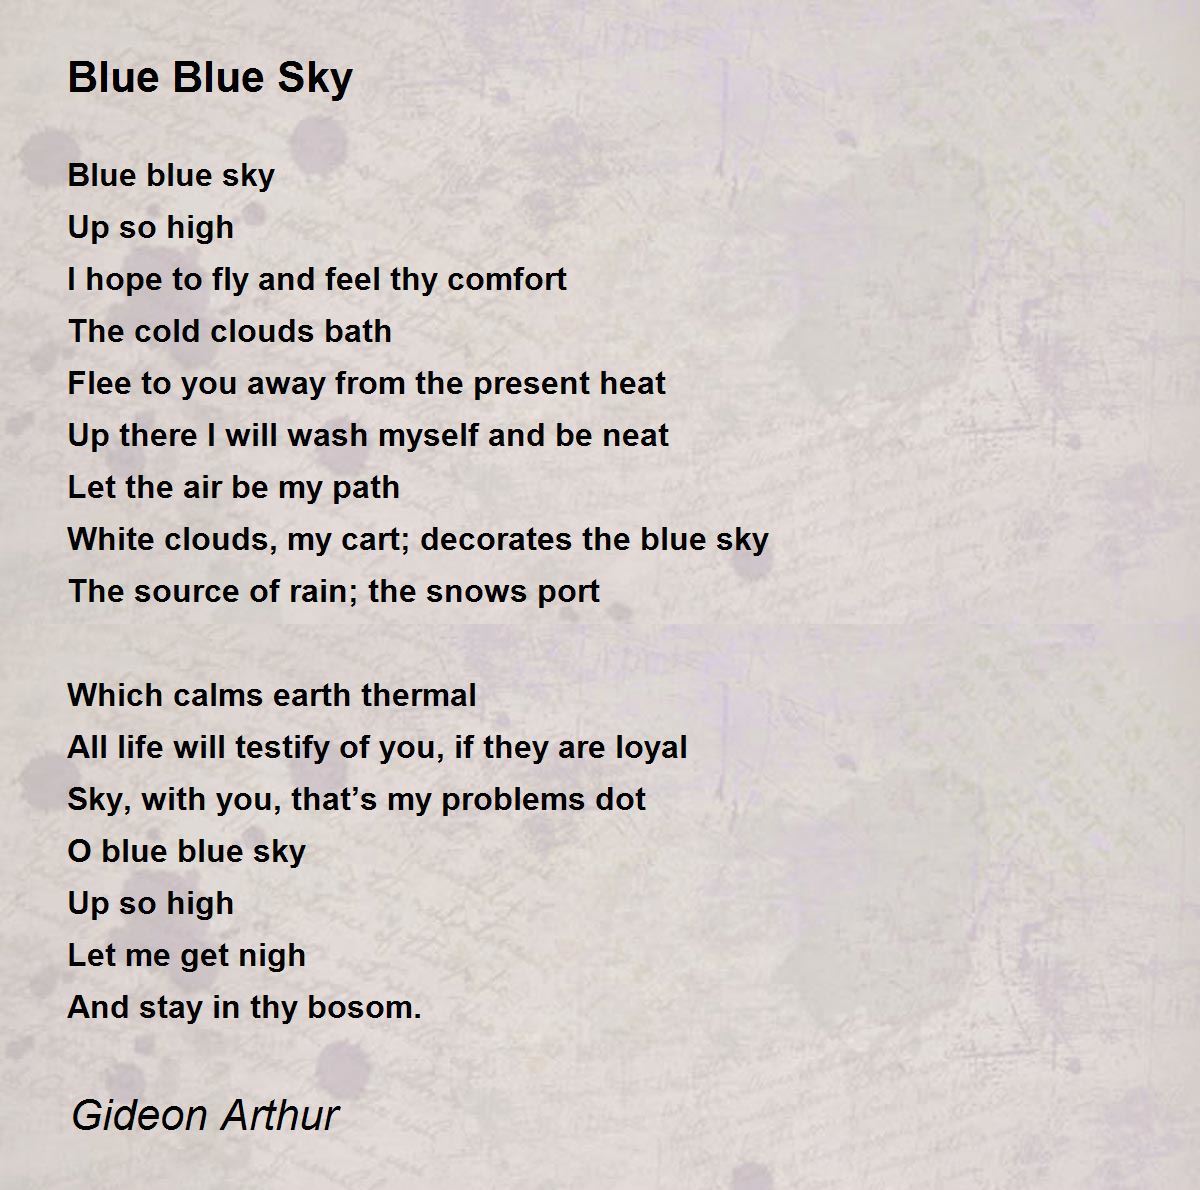 Blue Blue Sky - Blue Blue Sky Poem by Gideon Arthur